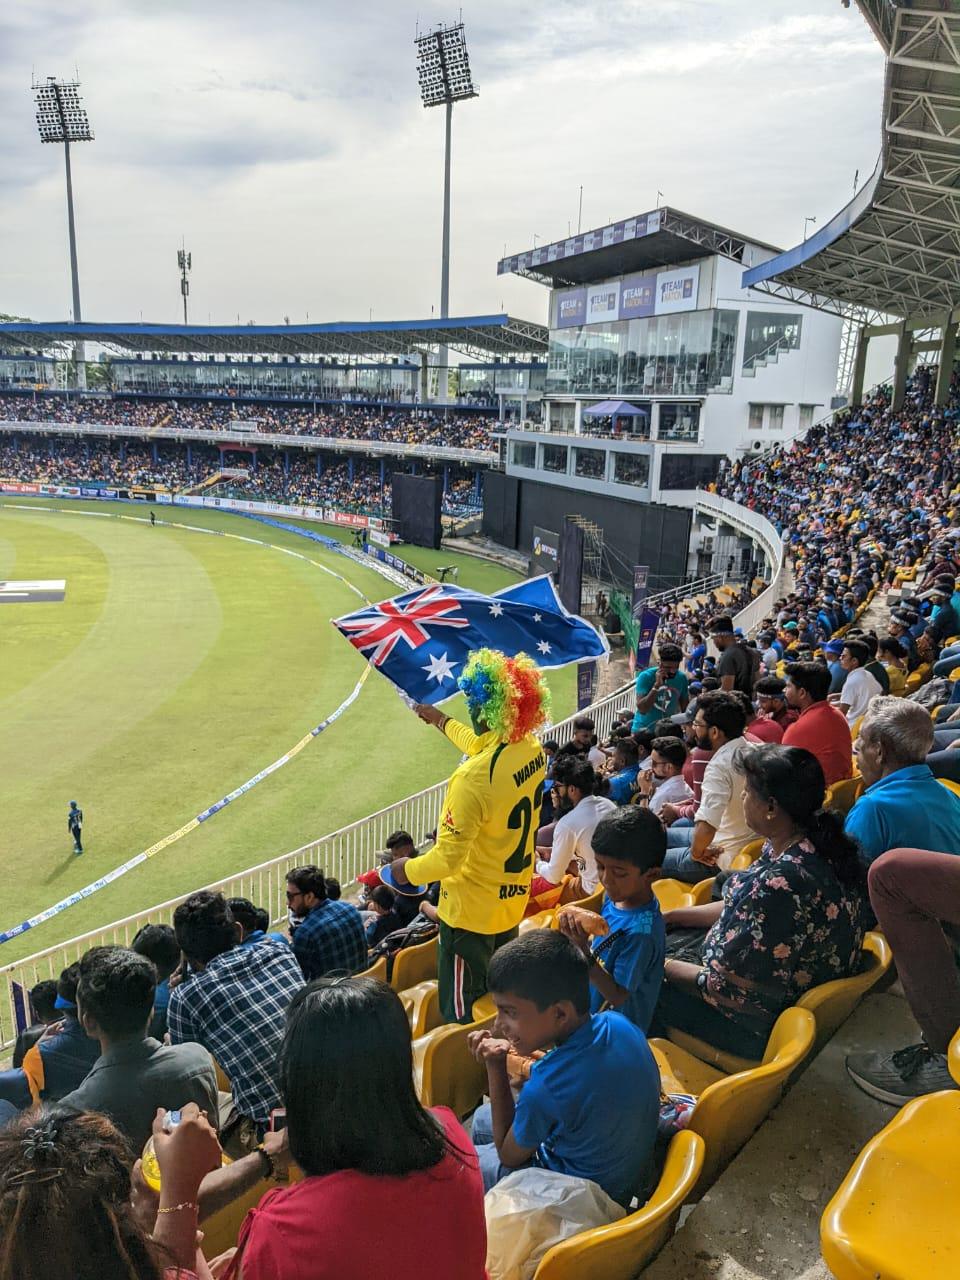 A Sri Lankan cricket fan wears yellow representing the rival Australian team and waves an Australian flag